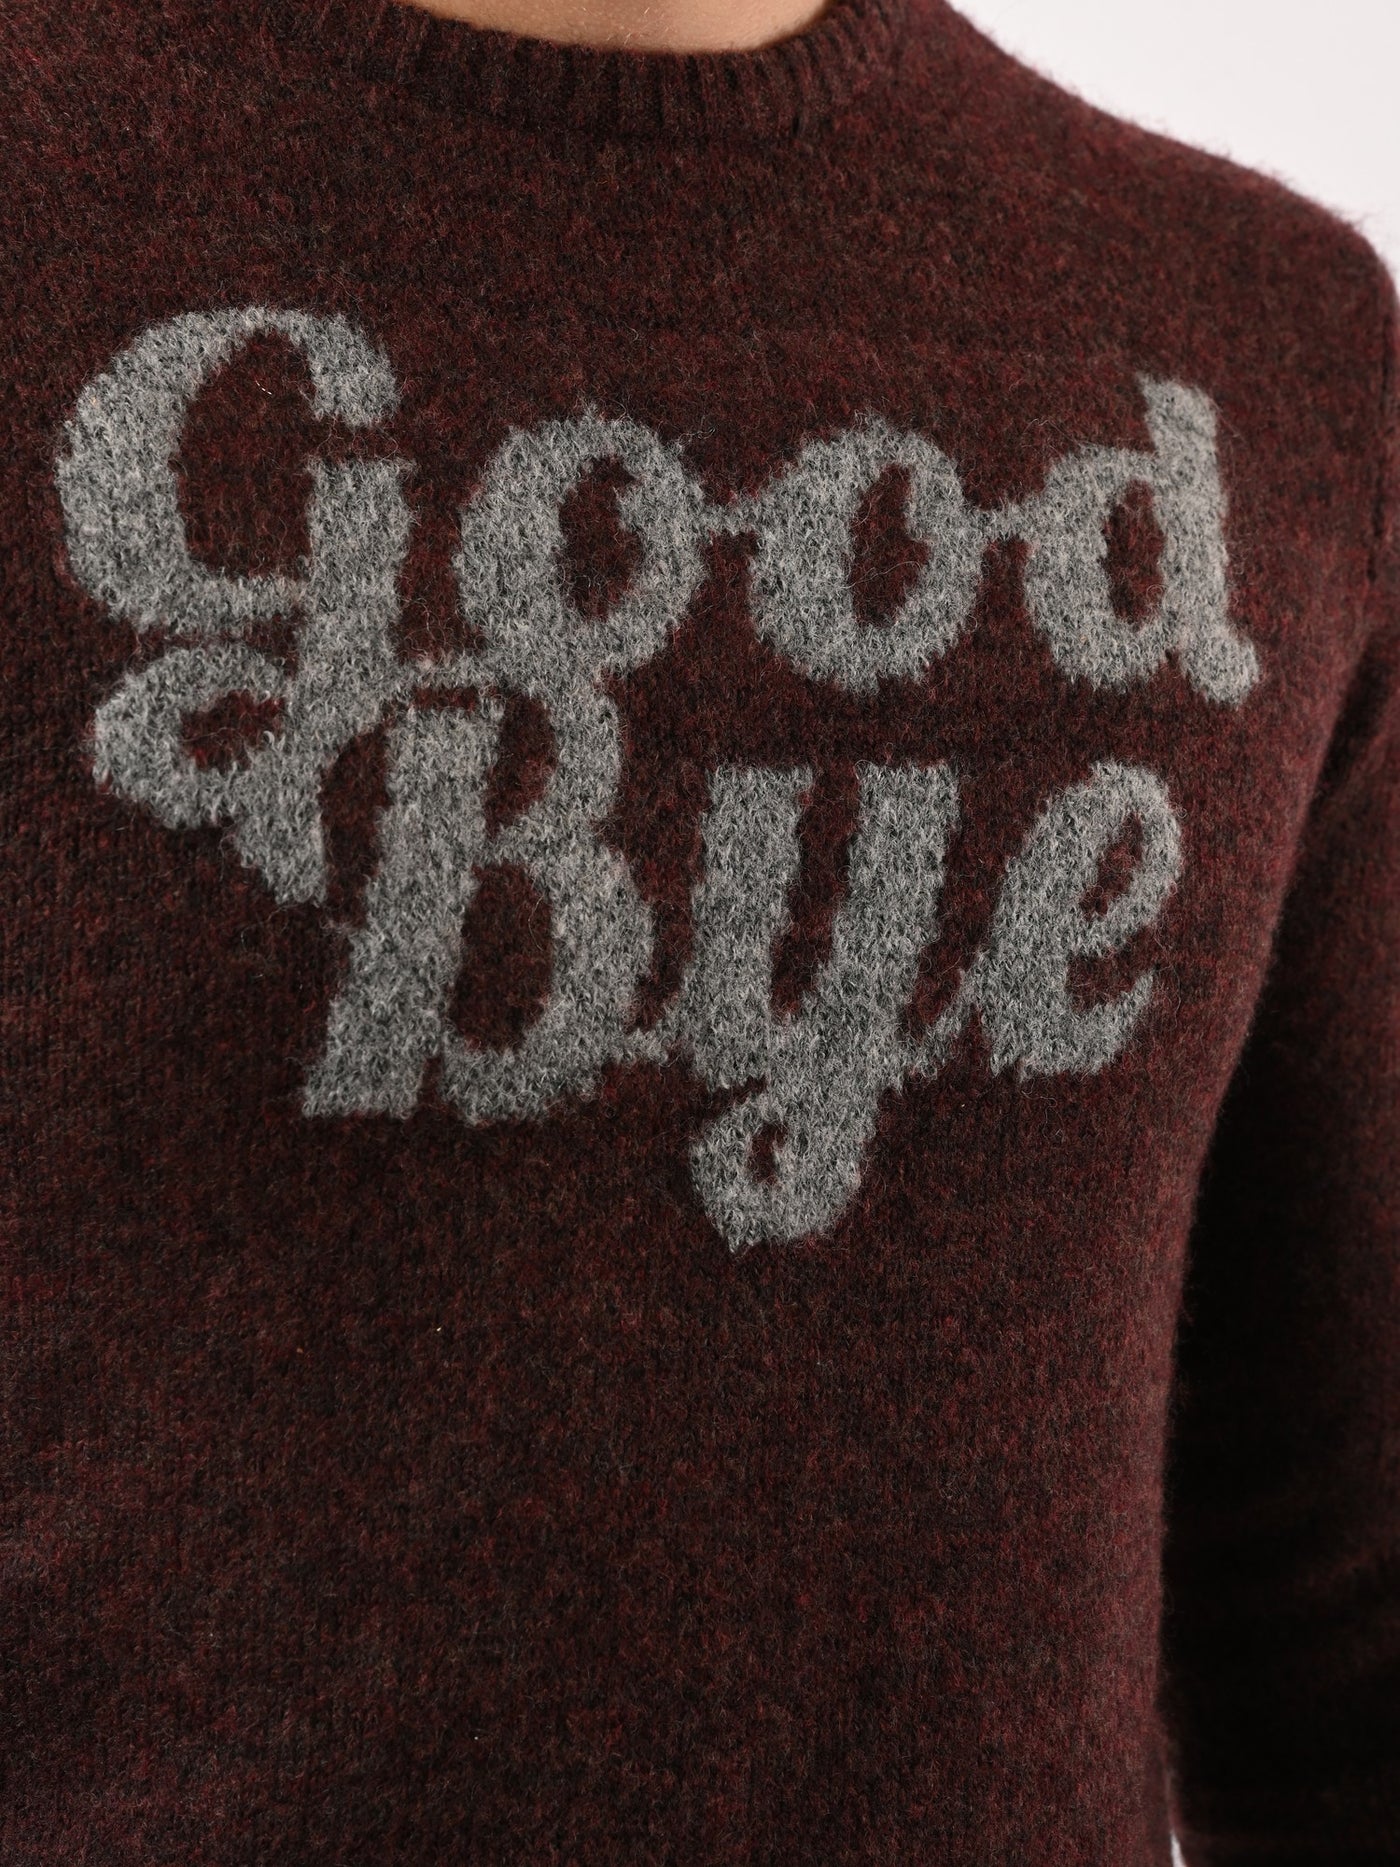 بلوفر - "Good Bye"  - مريح